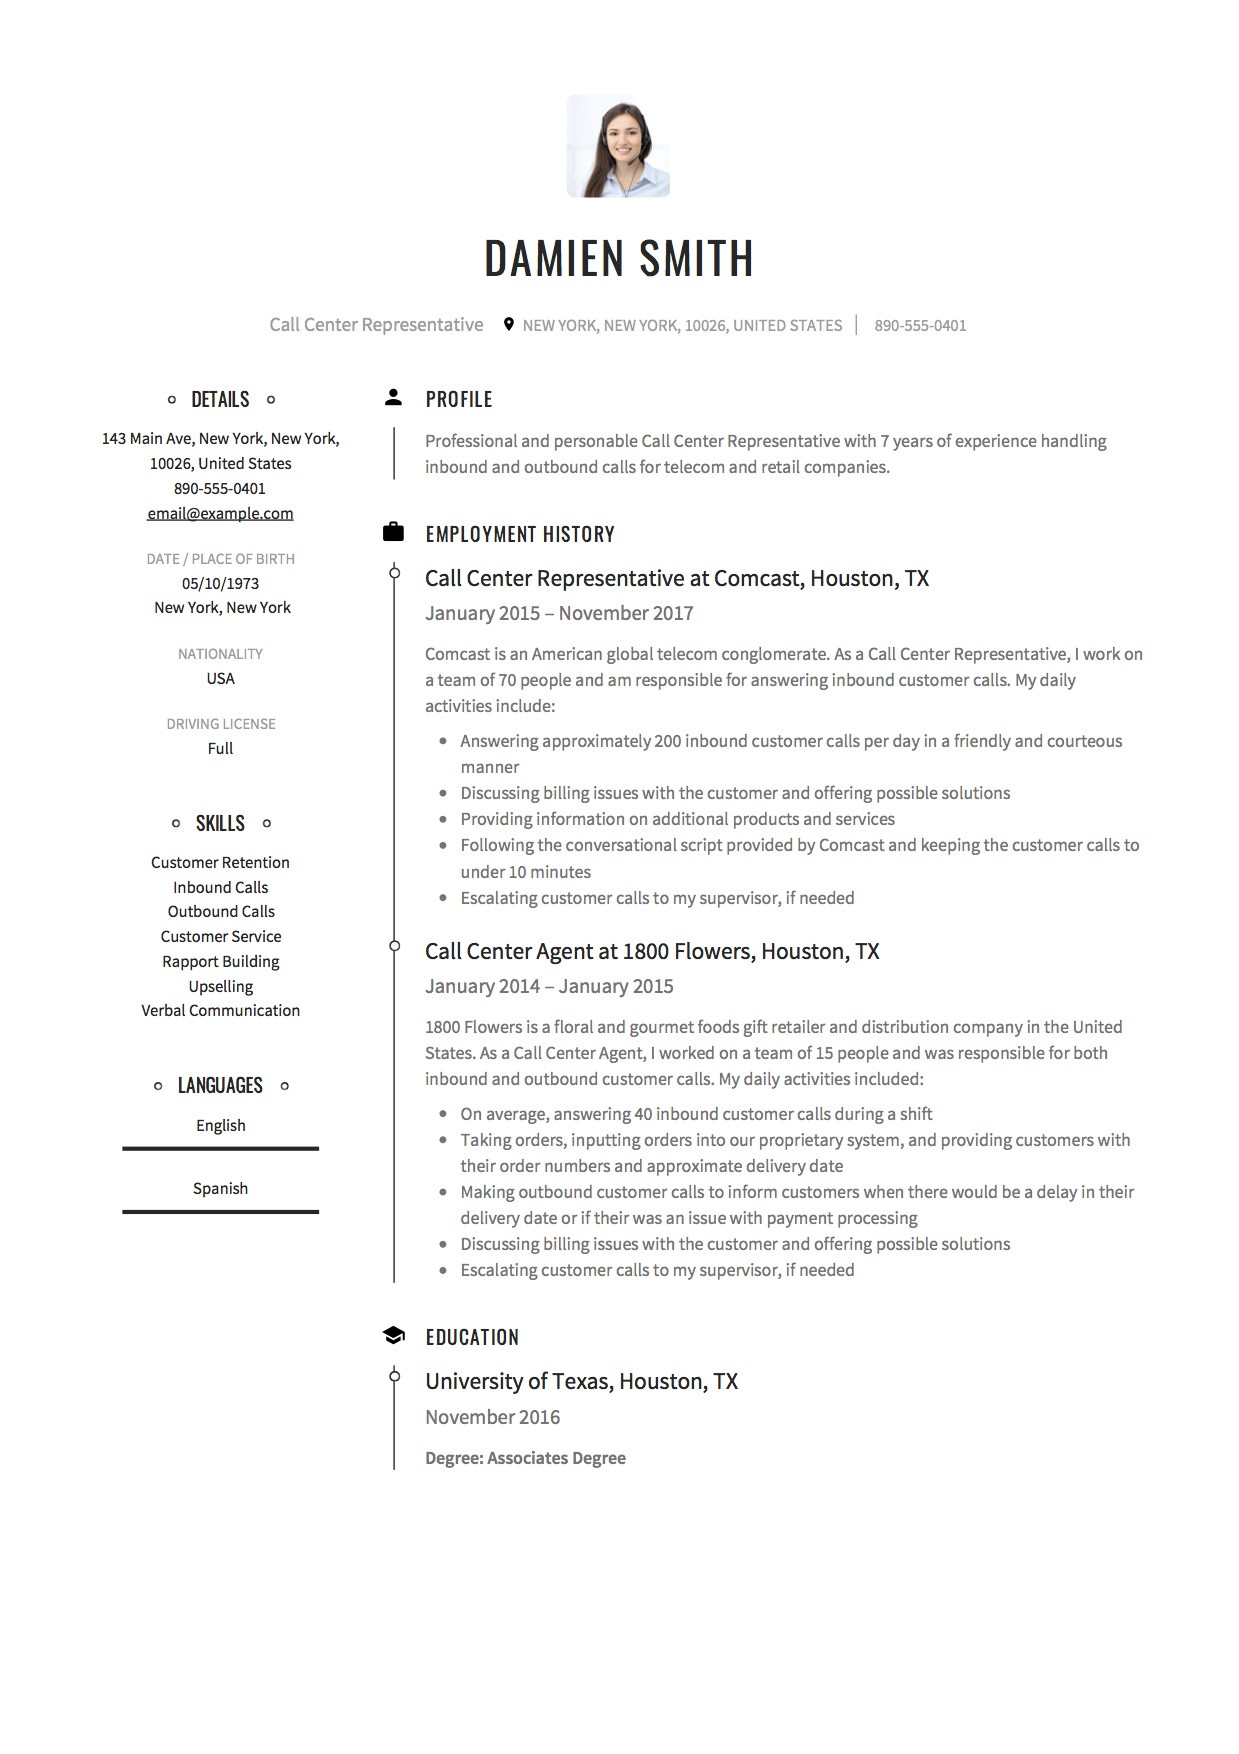 Sample Resume for Entry Level Non Voice Representative Call Center Resume & Guide (lancarrezekiq 12 Free Downloads) 2022